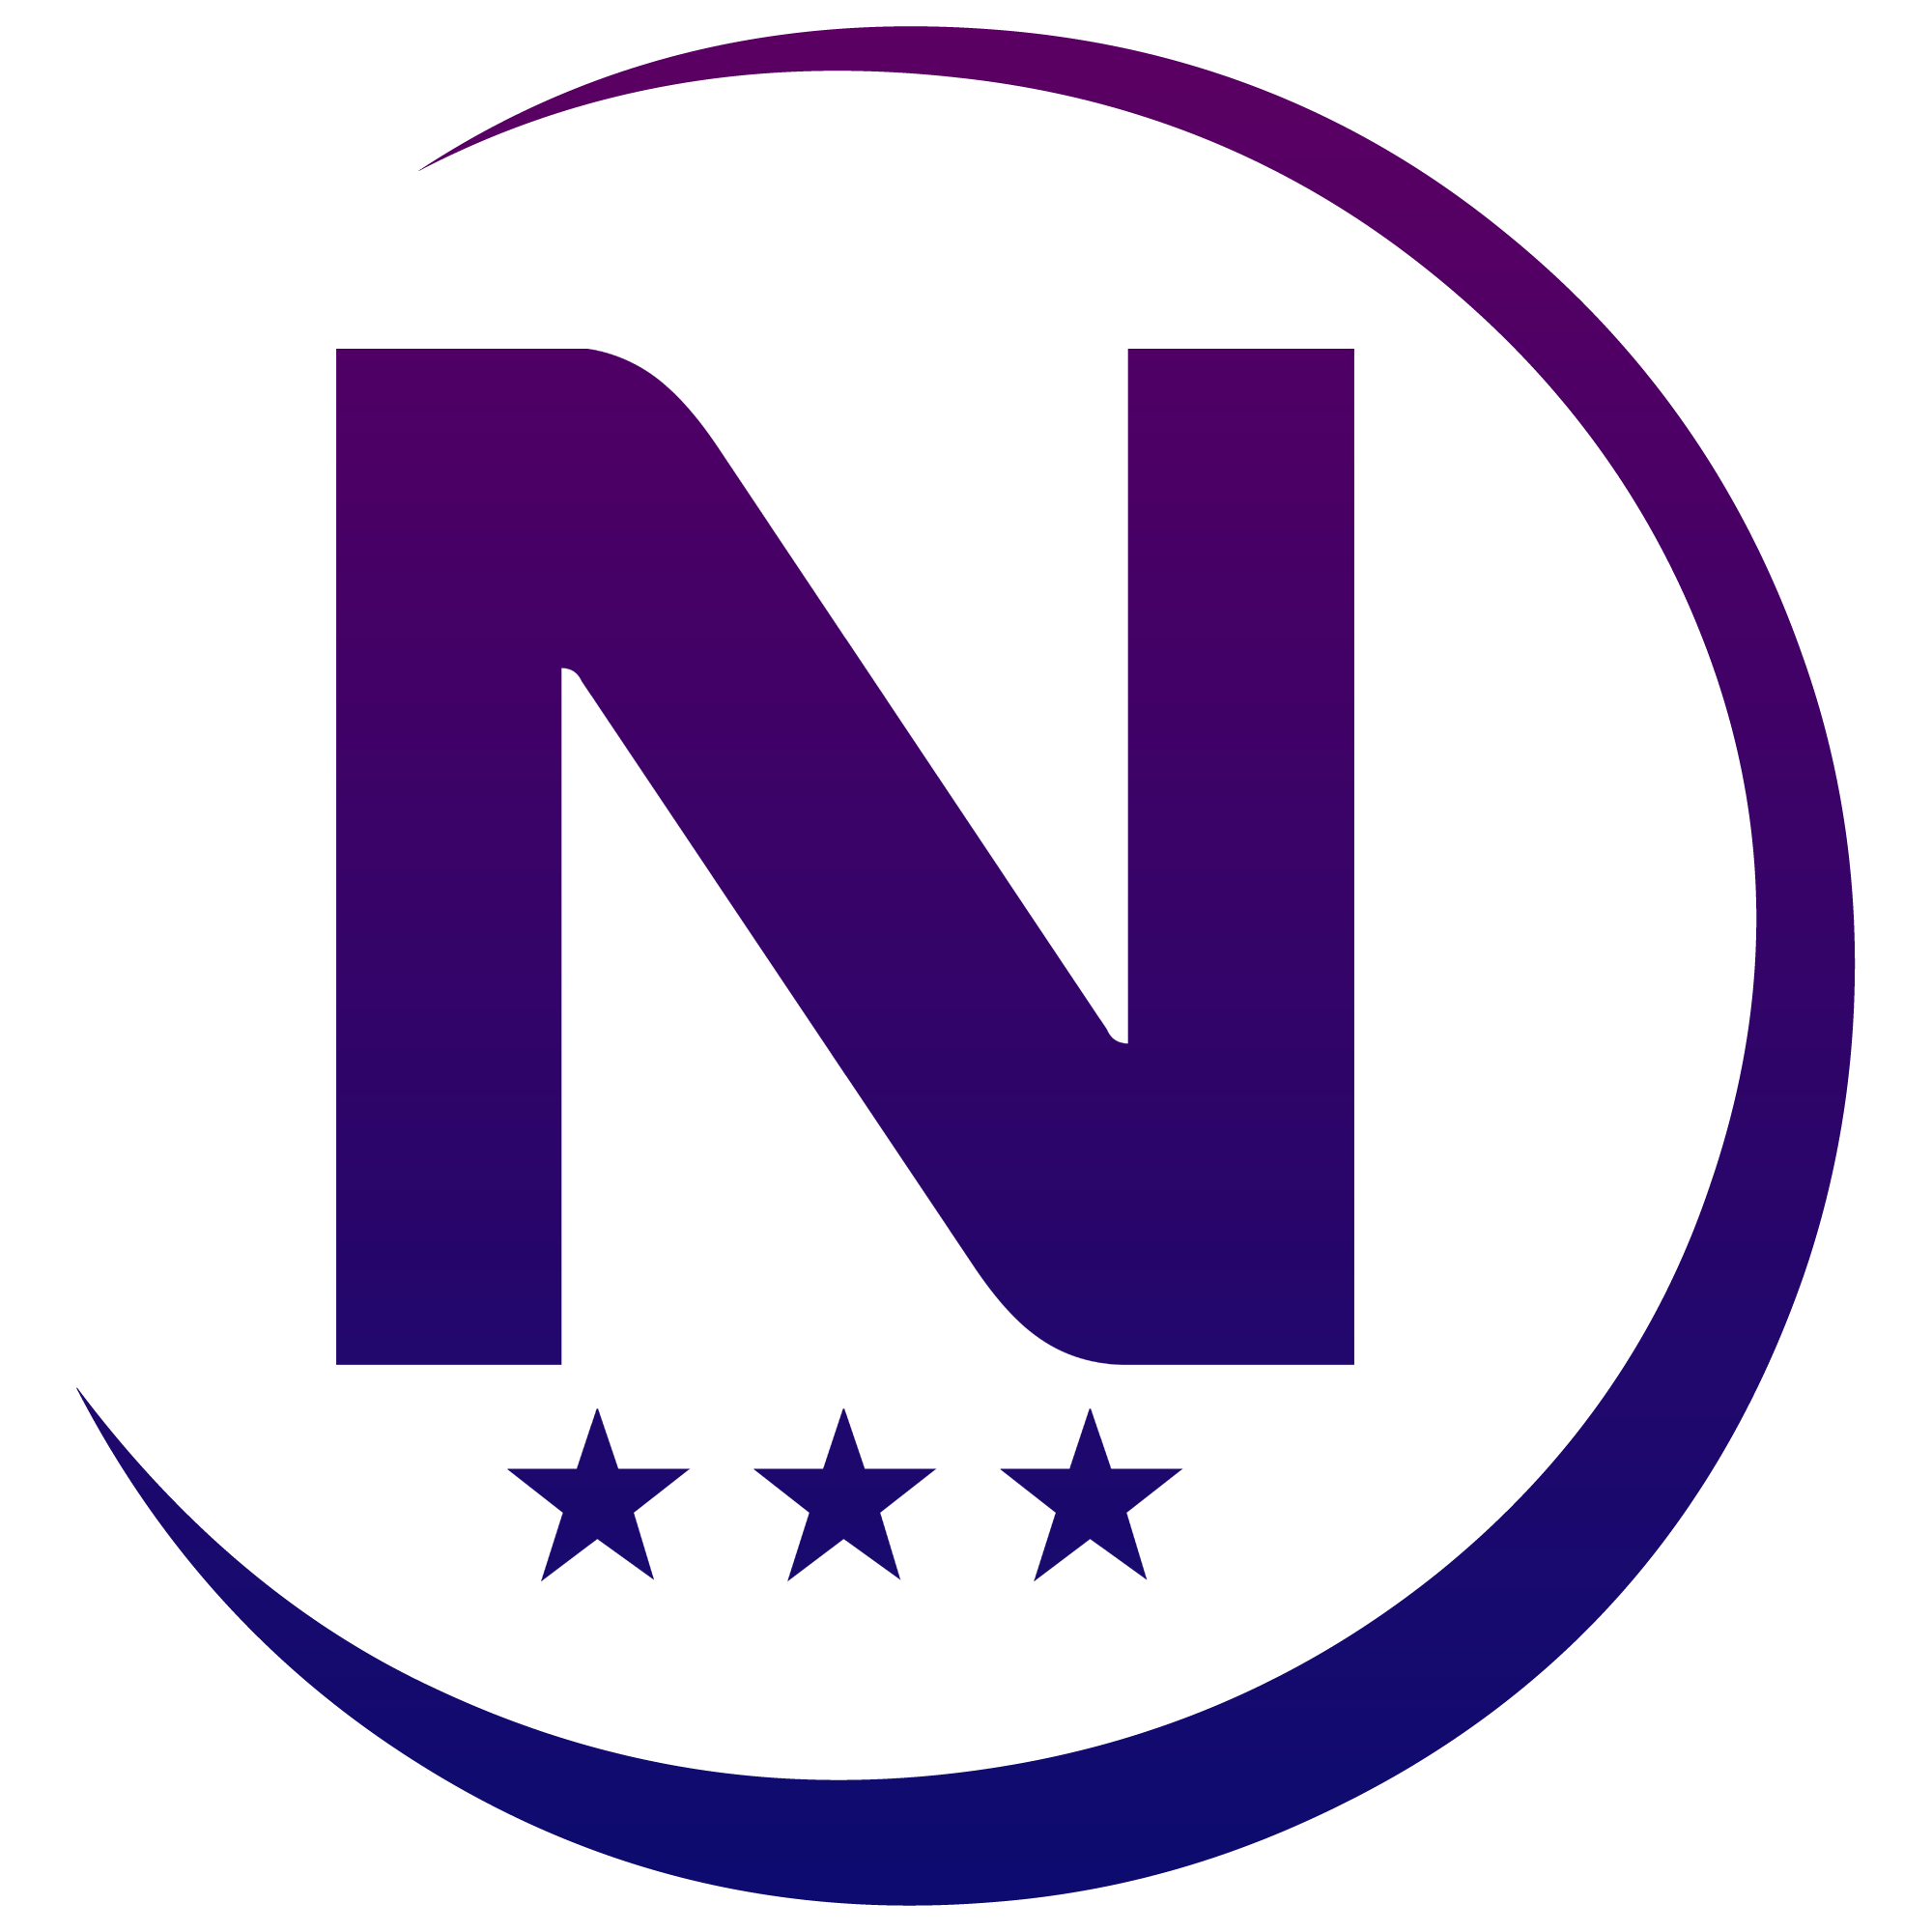 NPP Logo - File:NPP NATIONAL PROGRESS PARTY LOGO 6.png - Wikimedia Commons